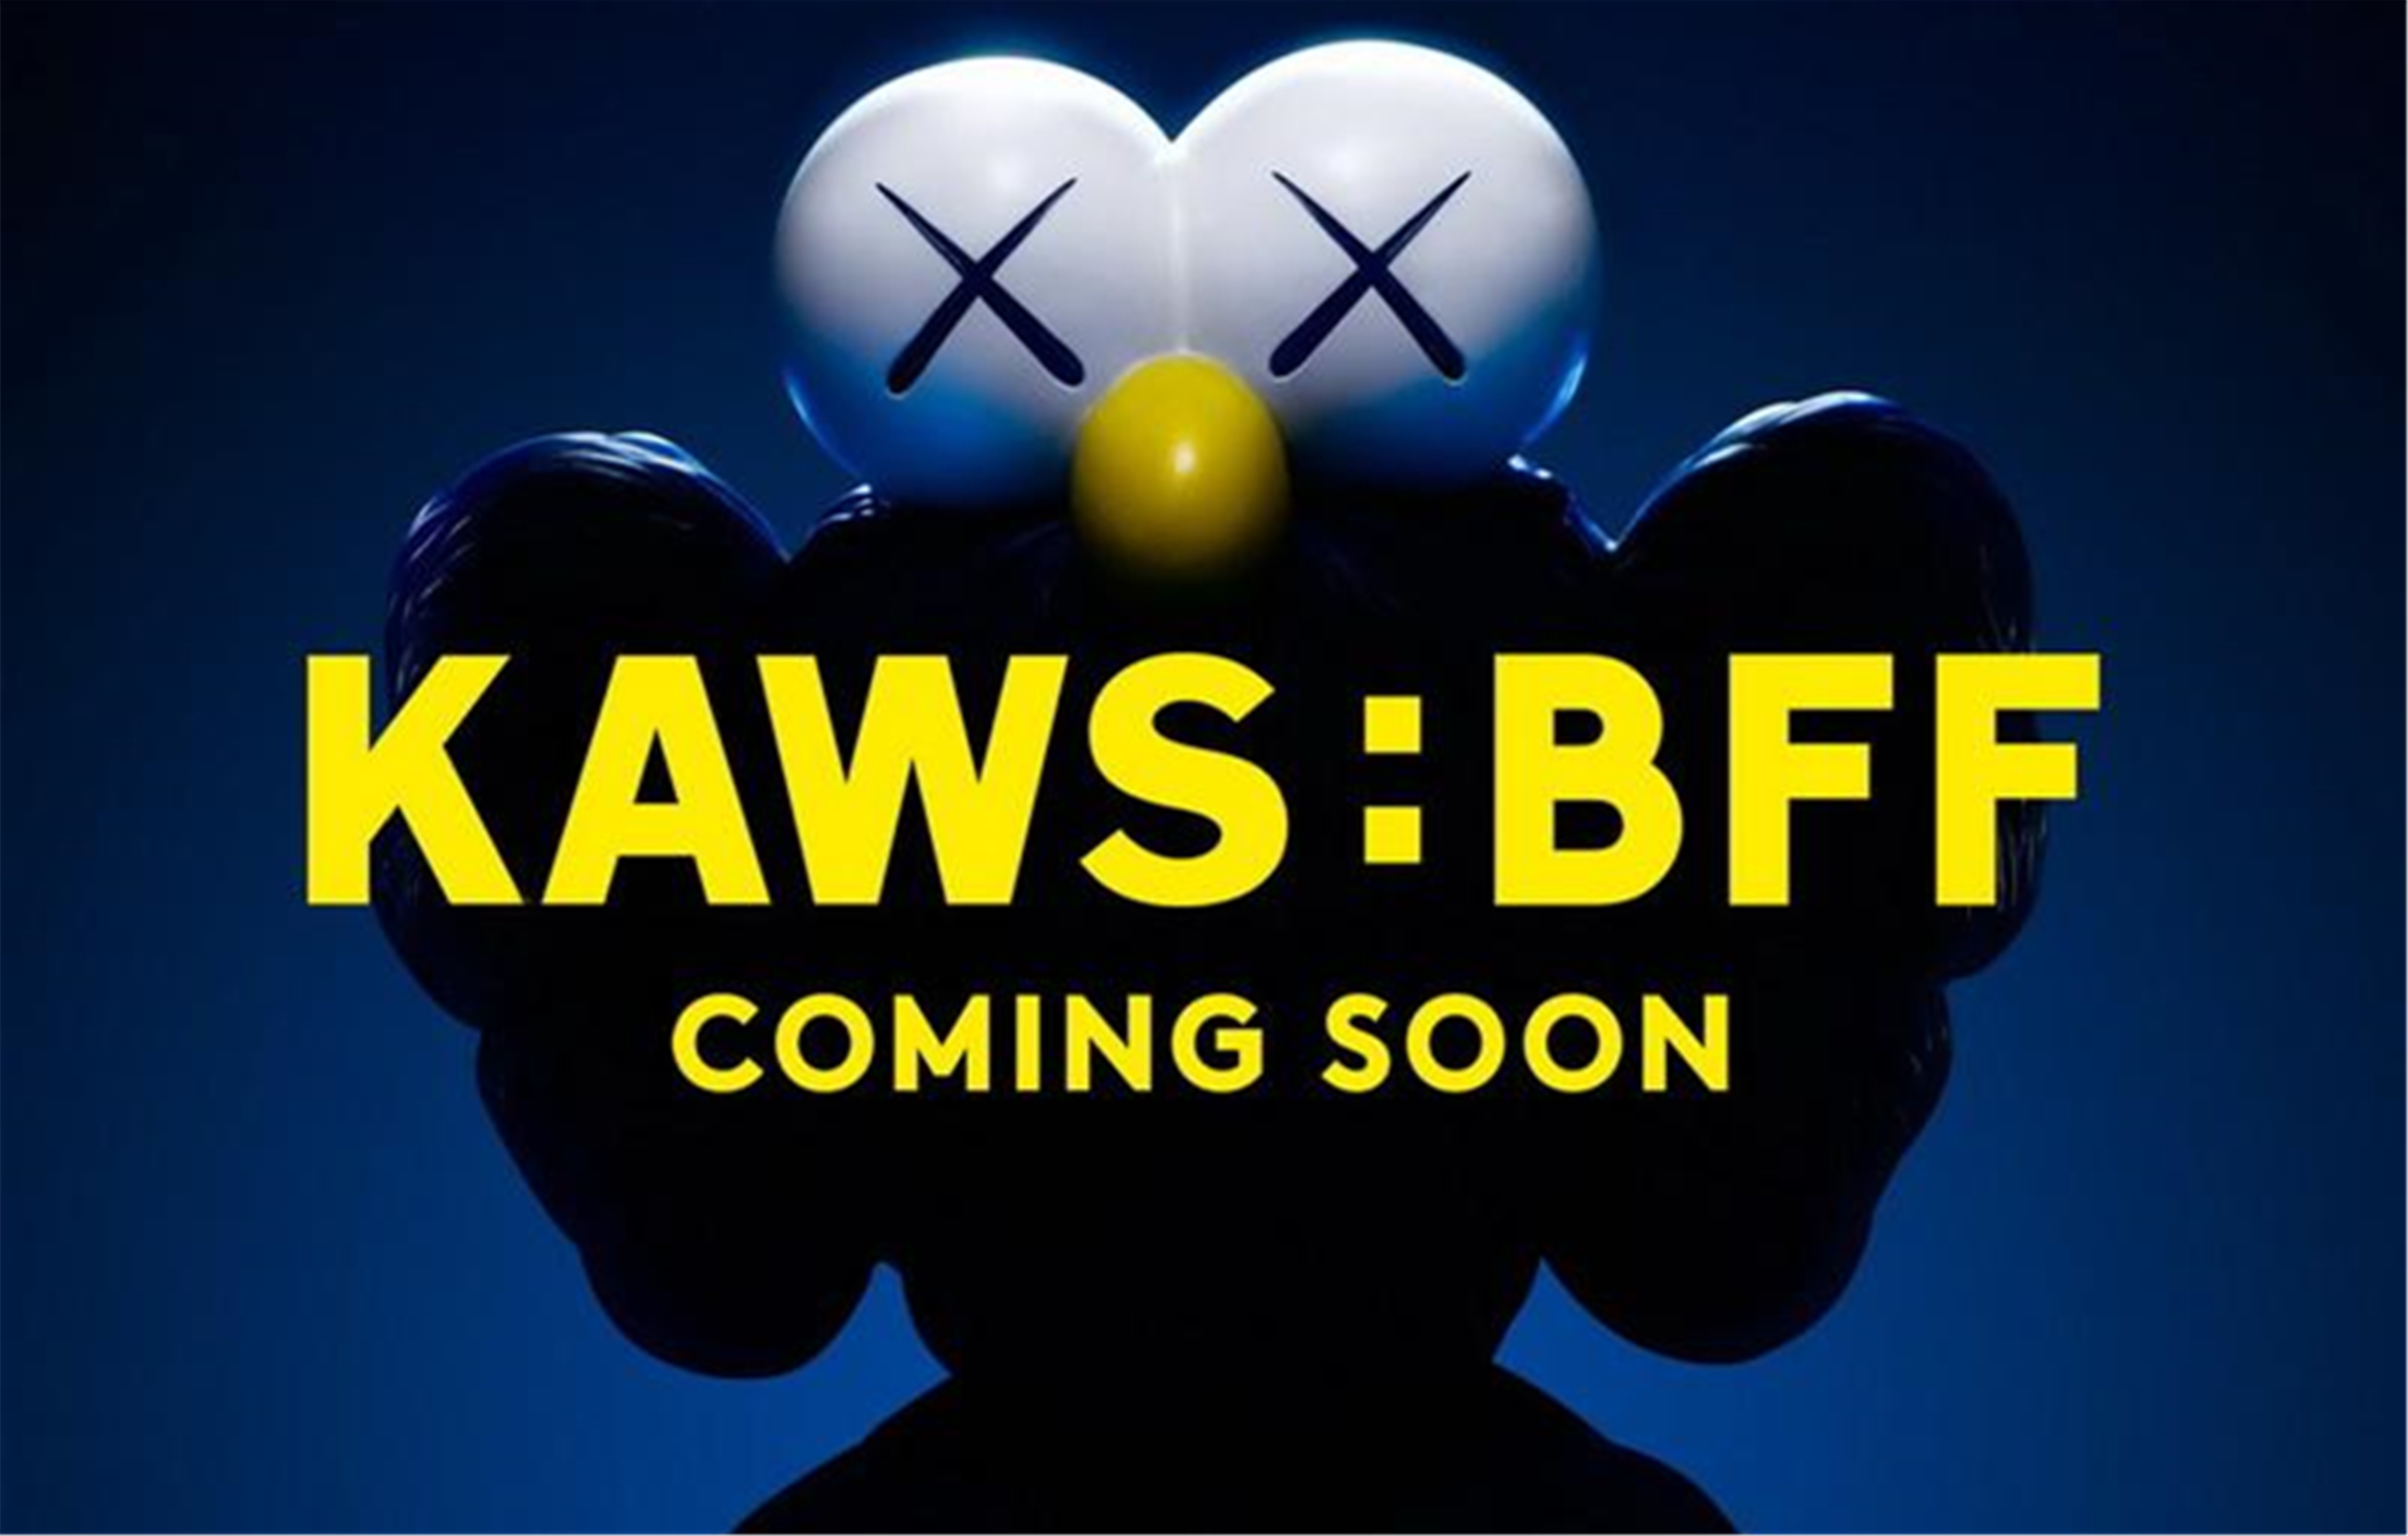 kaws:bff搪胶公仔月底发售!炒价又将上天?